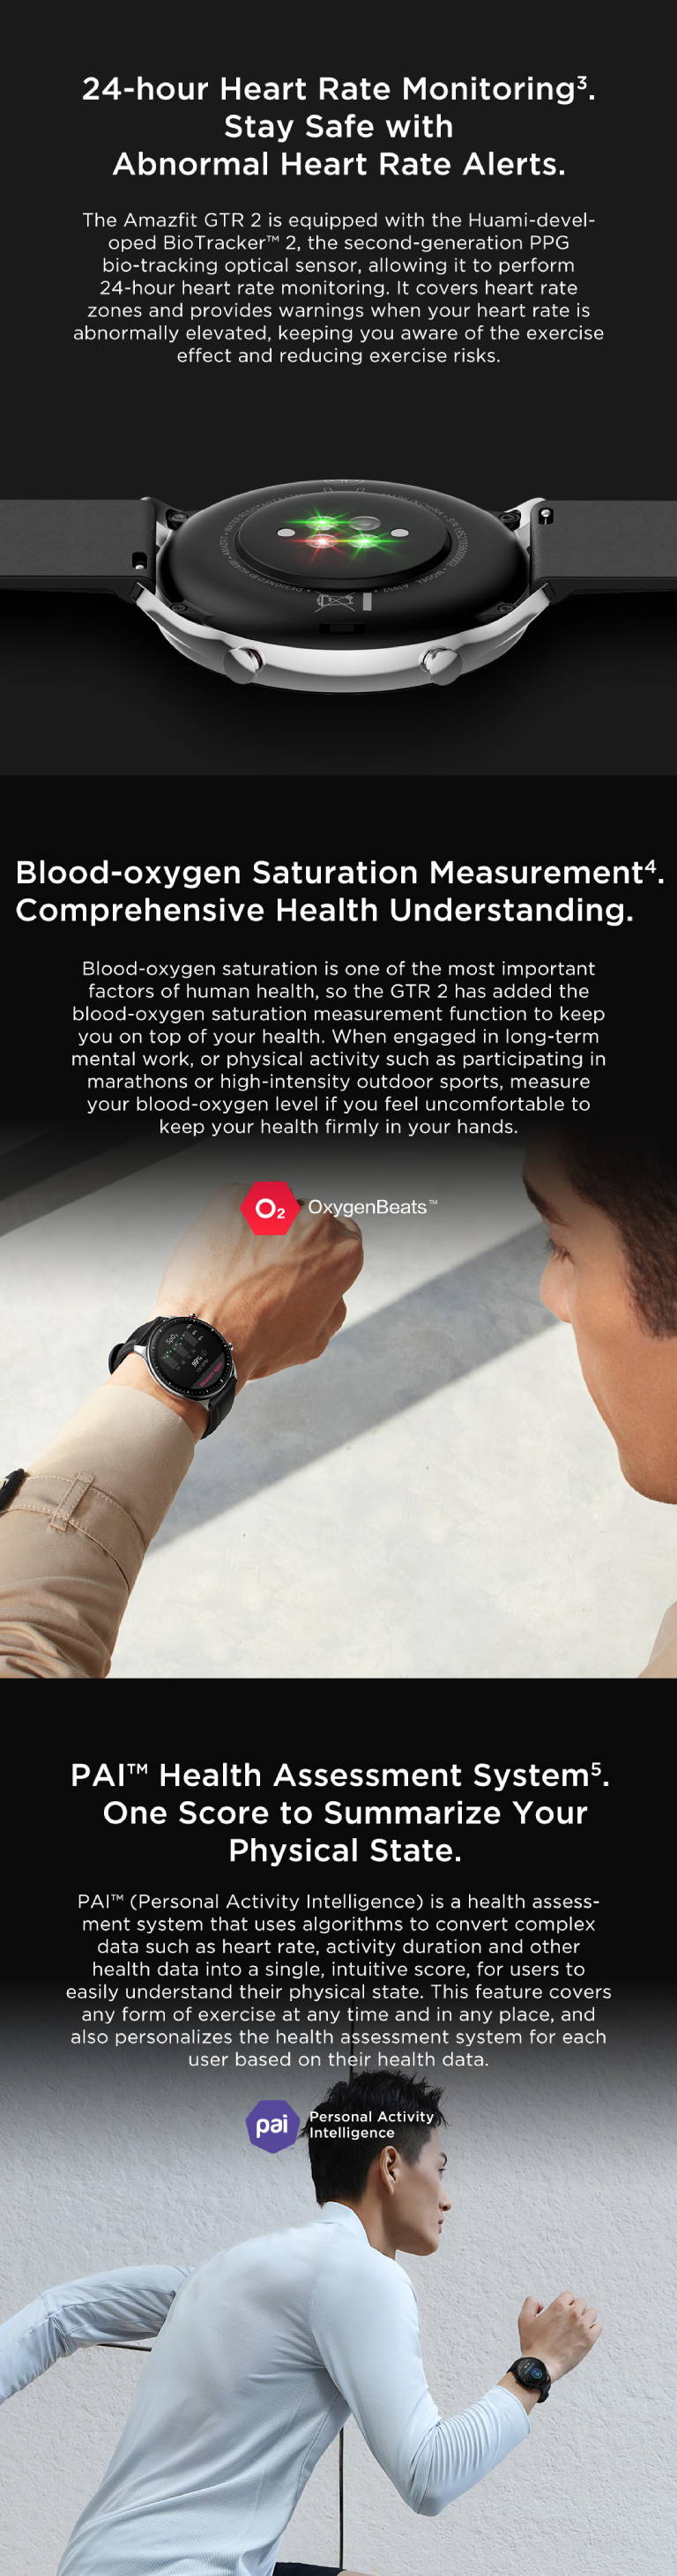 Amazfit GTR 2 LTE smartwatch with eSIM to launch soon